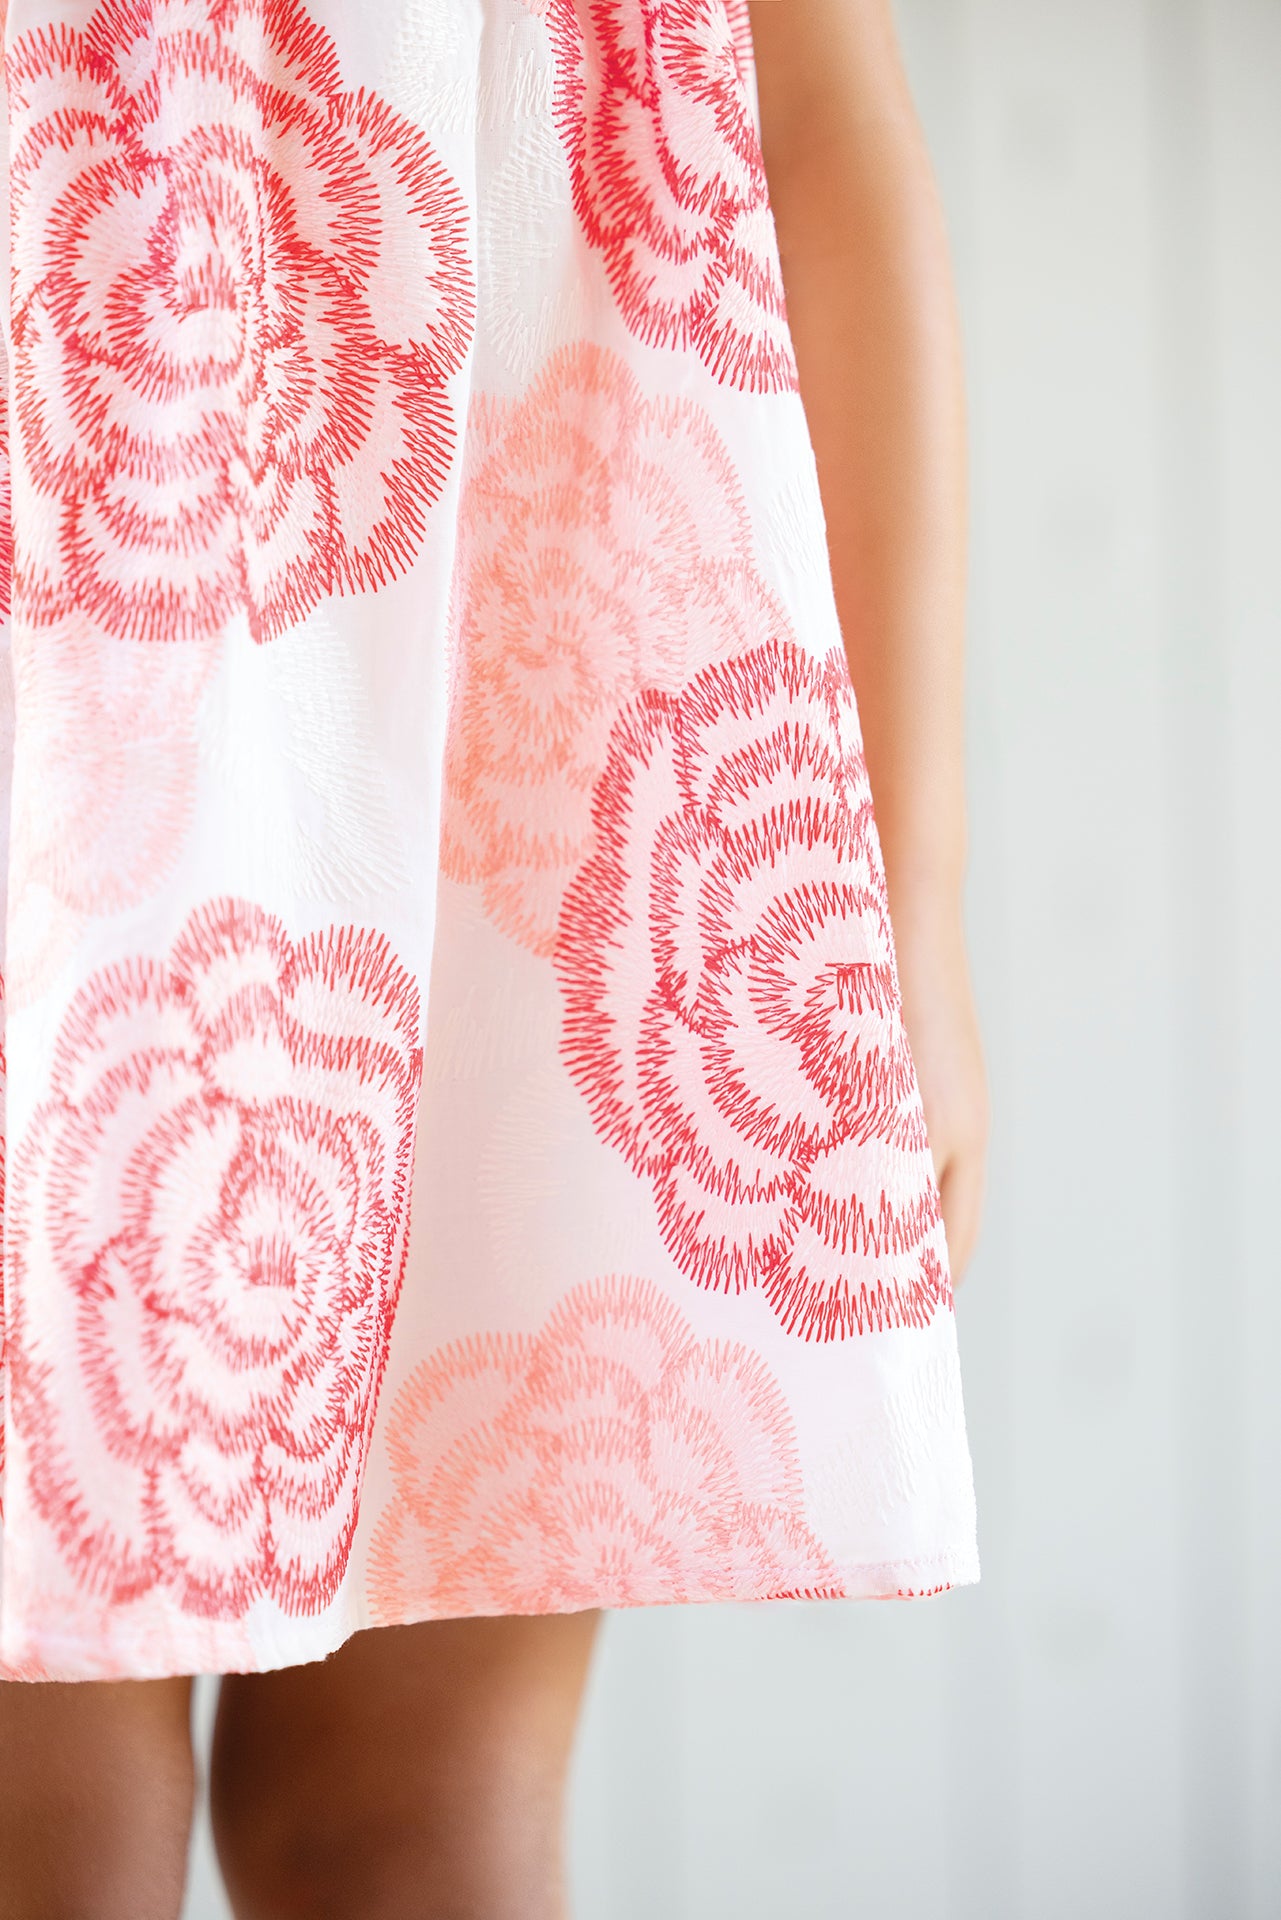 Dress - Pale pink flowery Ruffles Dragee / 5Y